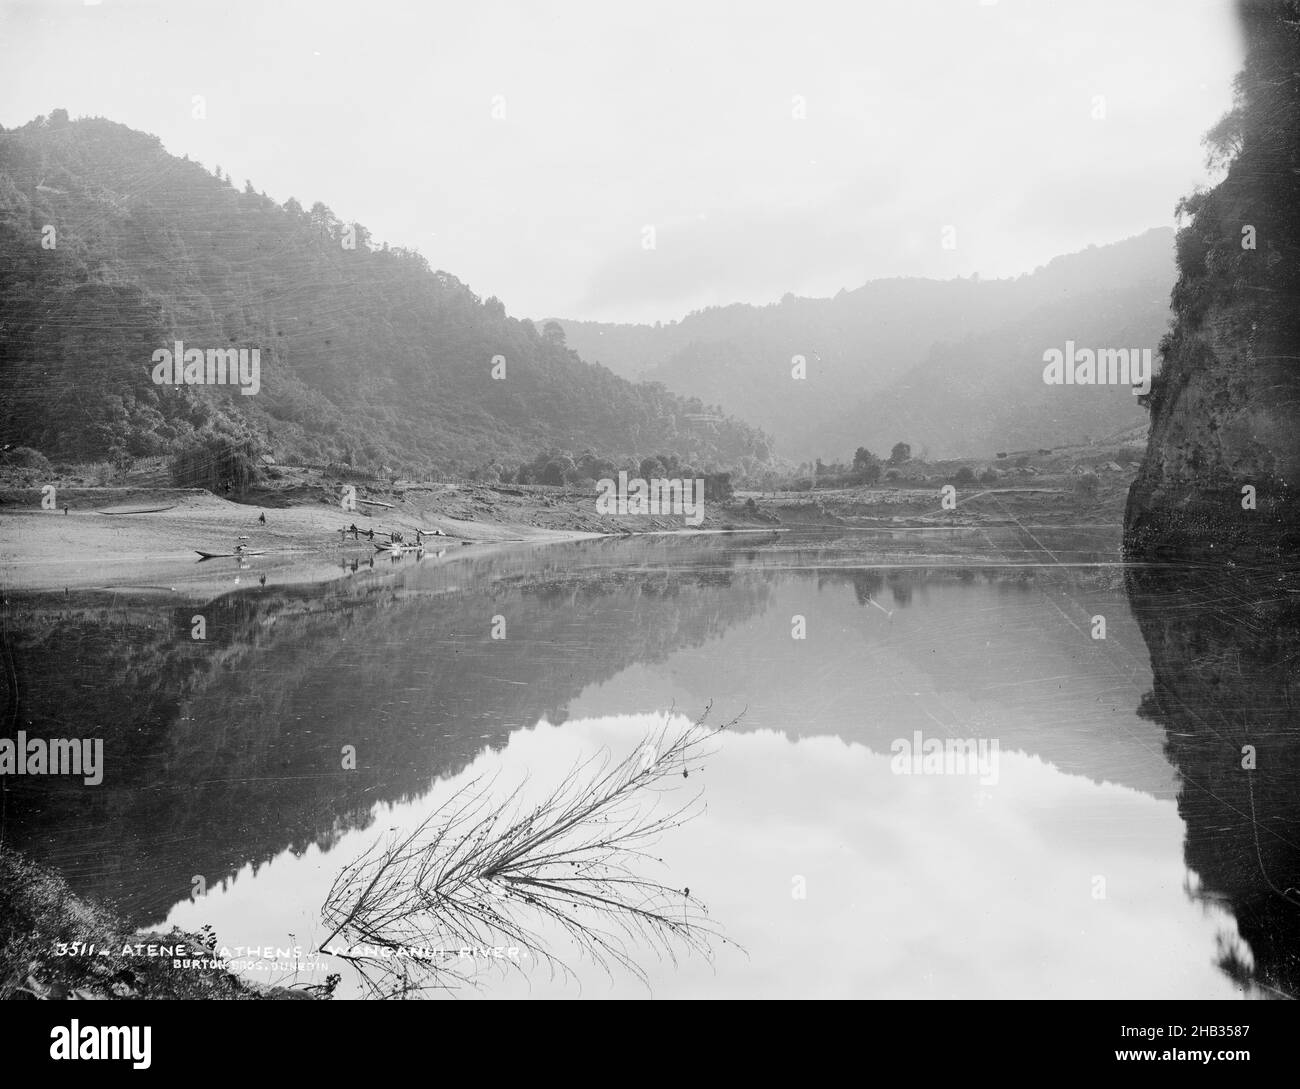 Atene (Athen), Wanganui River, Burton Brothers Studio, Fotostudio, Neuseeland, Gelatine Trockenplatte Prozess, Blick auf Whanganui Fluss, ist ein Zweig im Wasser sichtbar Stockfoto